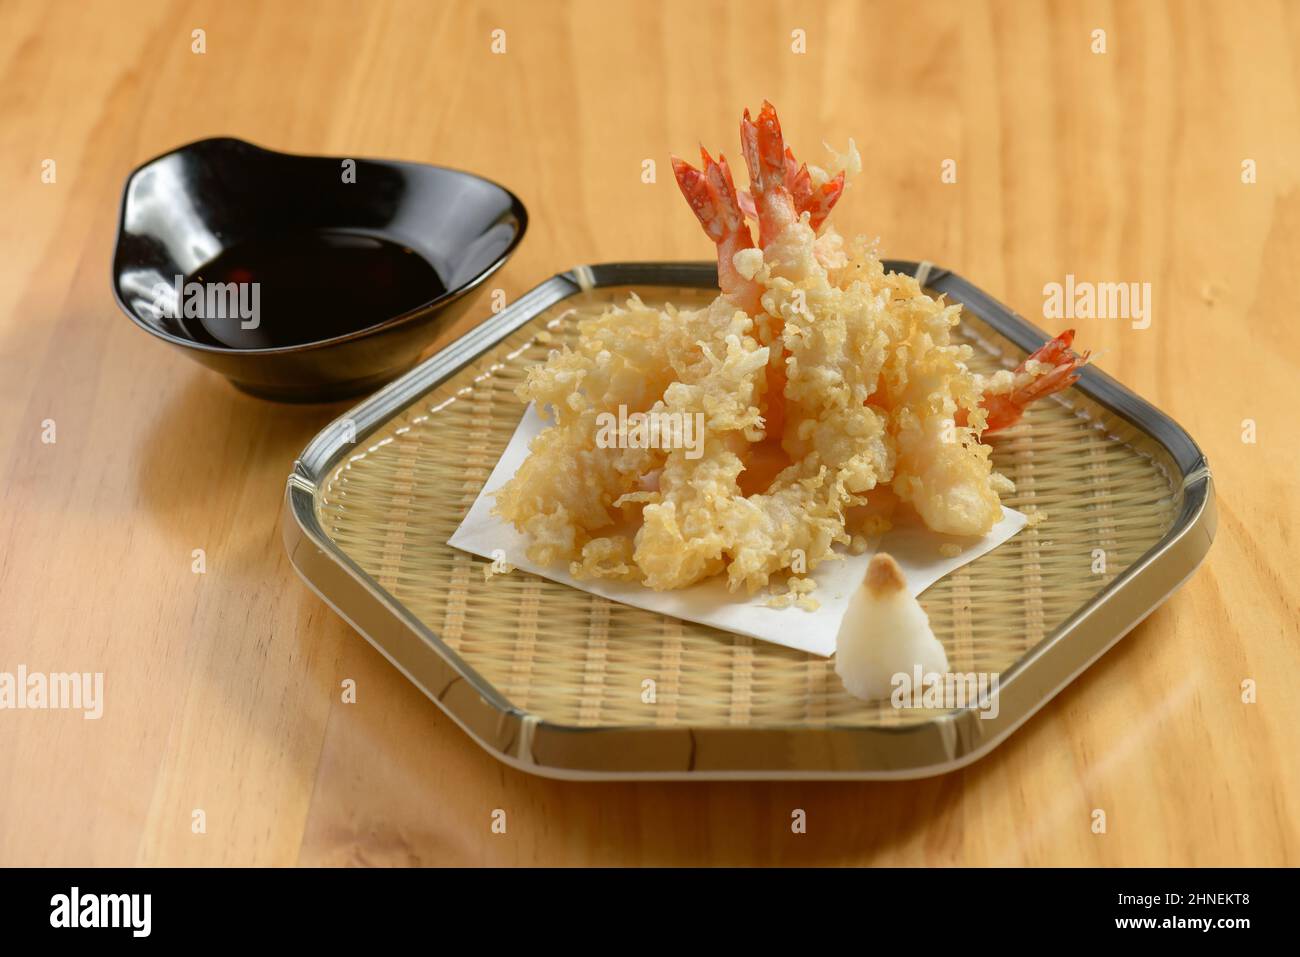 japanese food Deep Fried ebi tempura shrimp in a tray with chili sauce ...